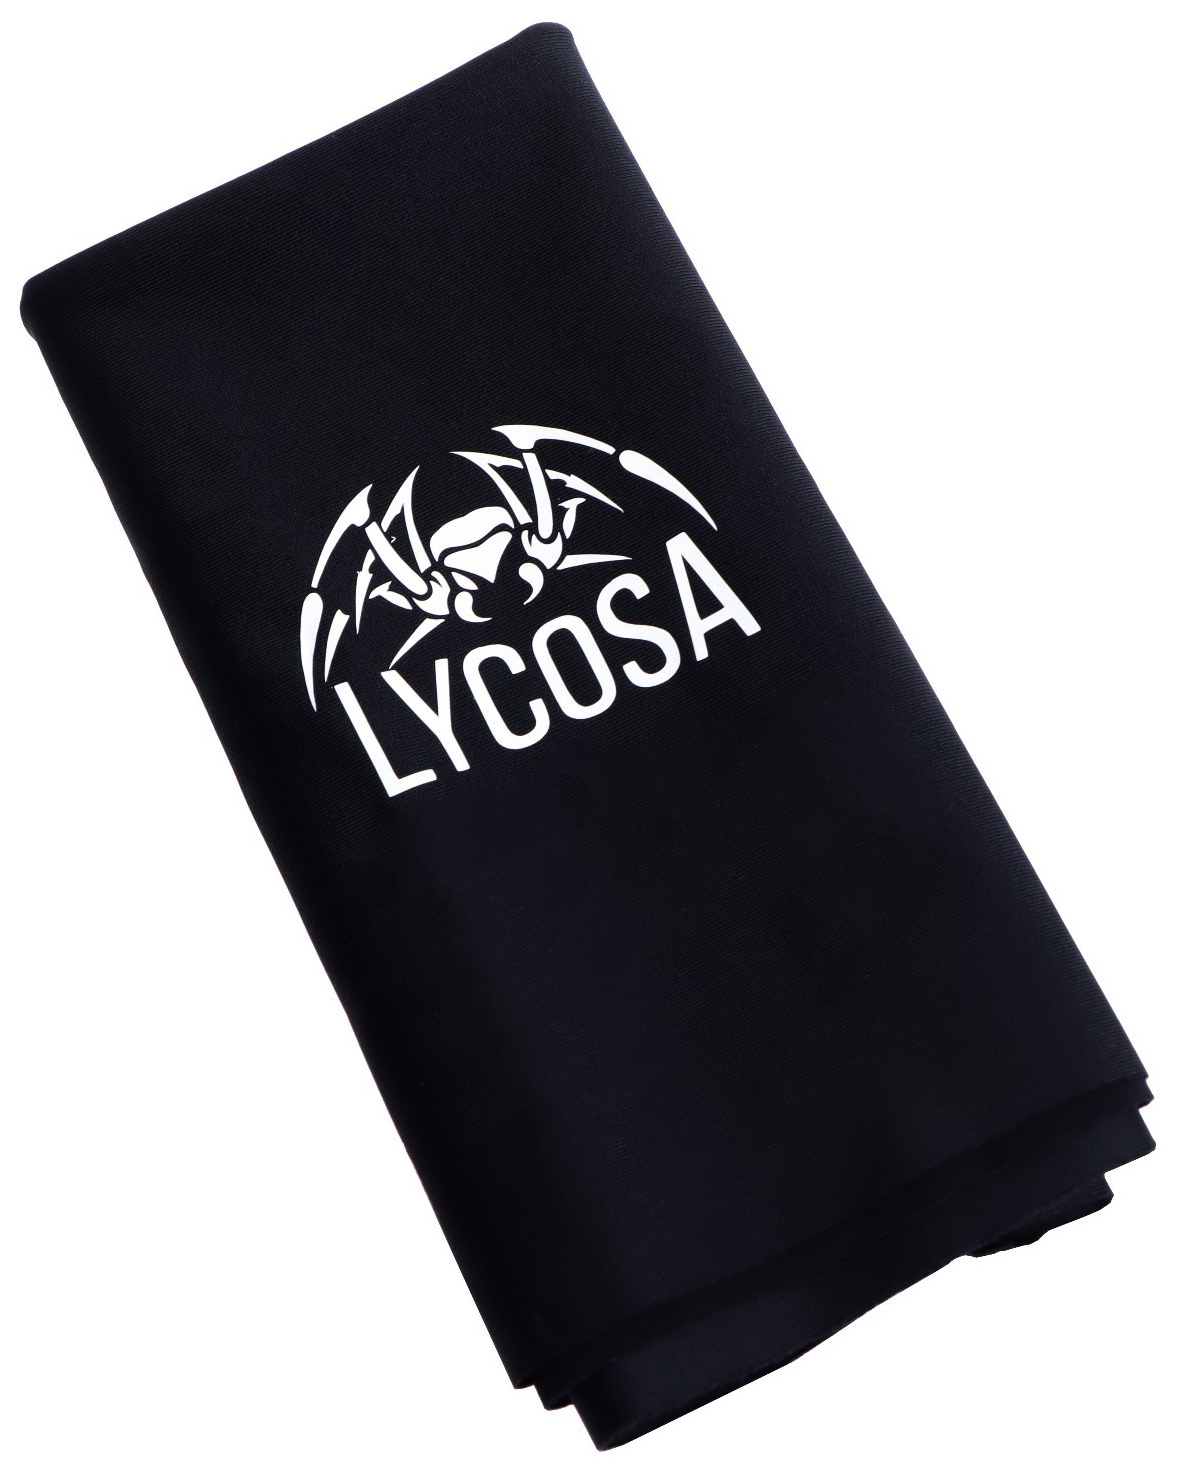 Ветрозащита шеи и груди LYCOSA WINDSTOPPER BLACK